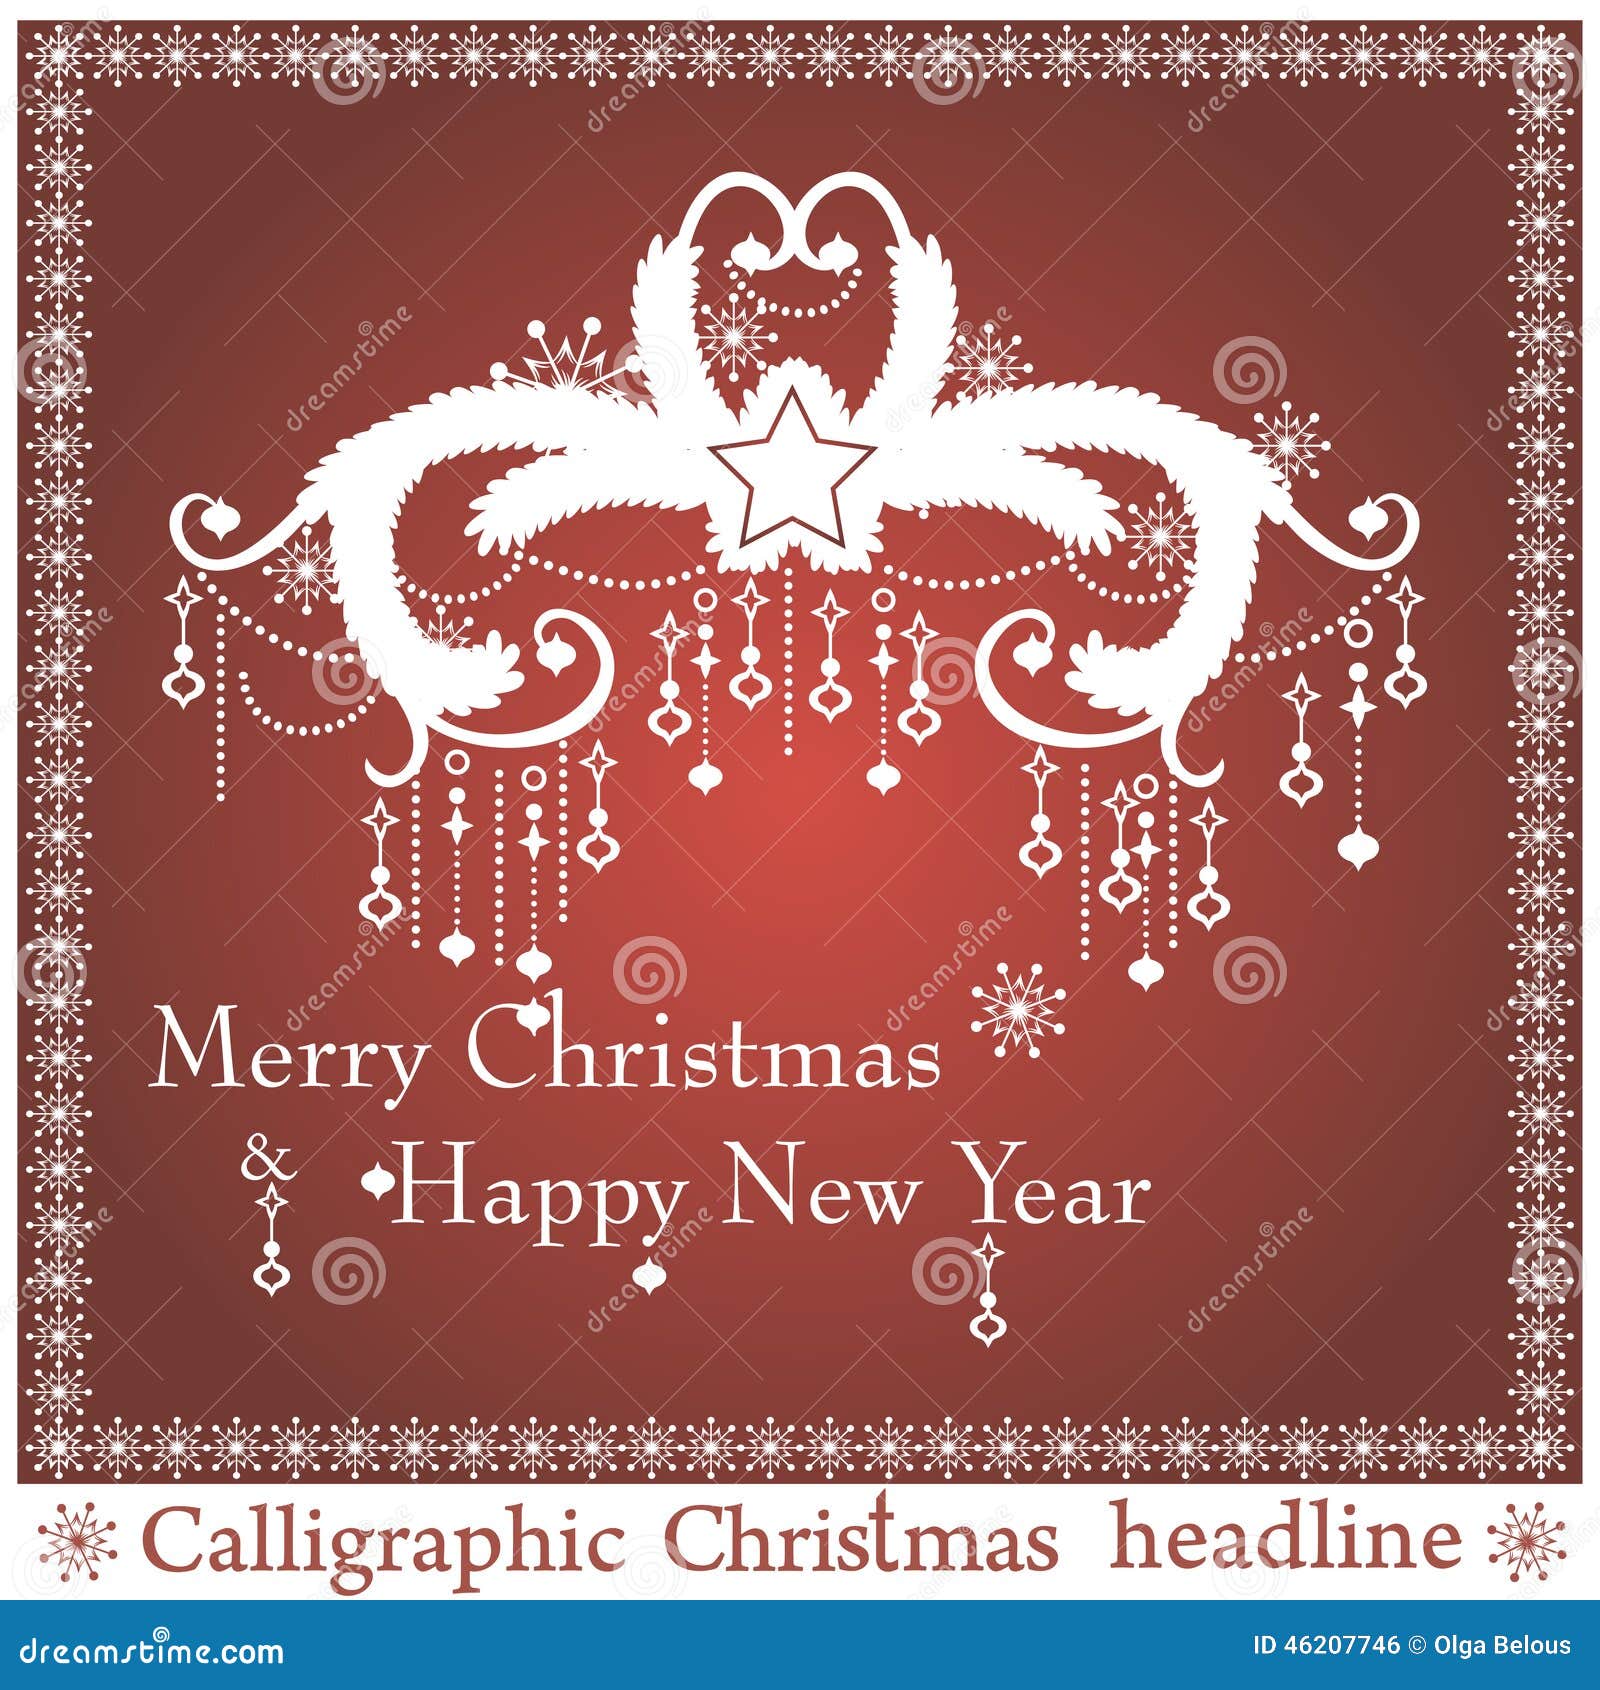 Vector Christmas headlines stock vector. Illustration of light - 46207746